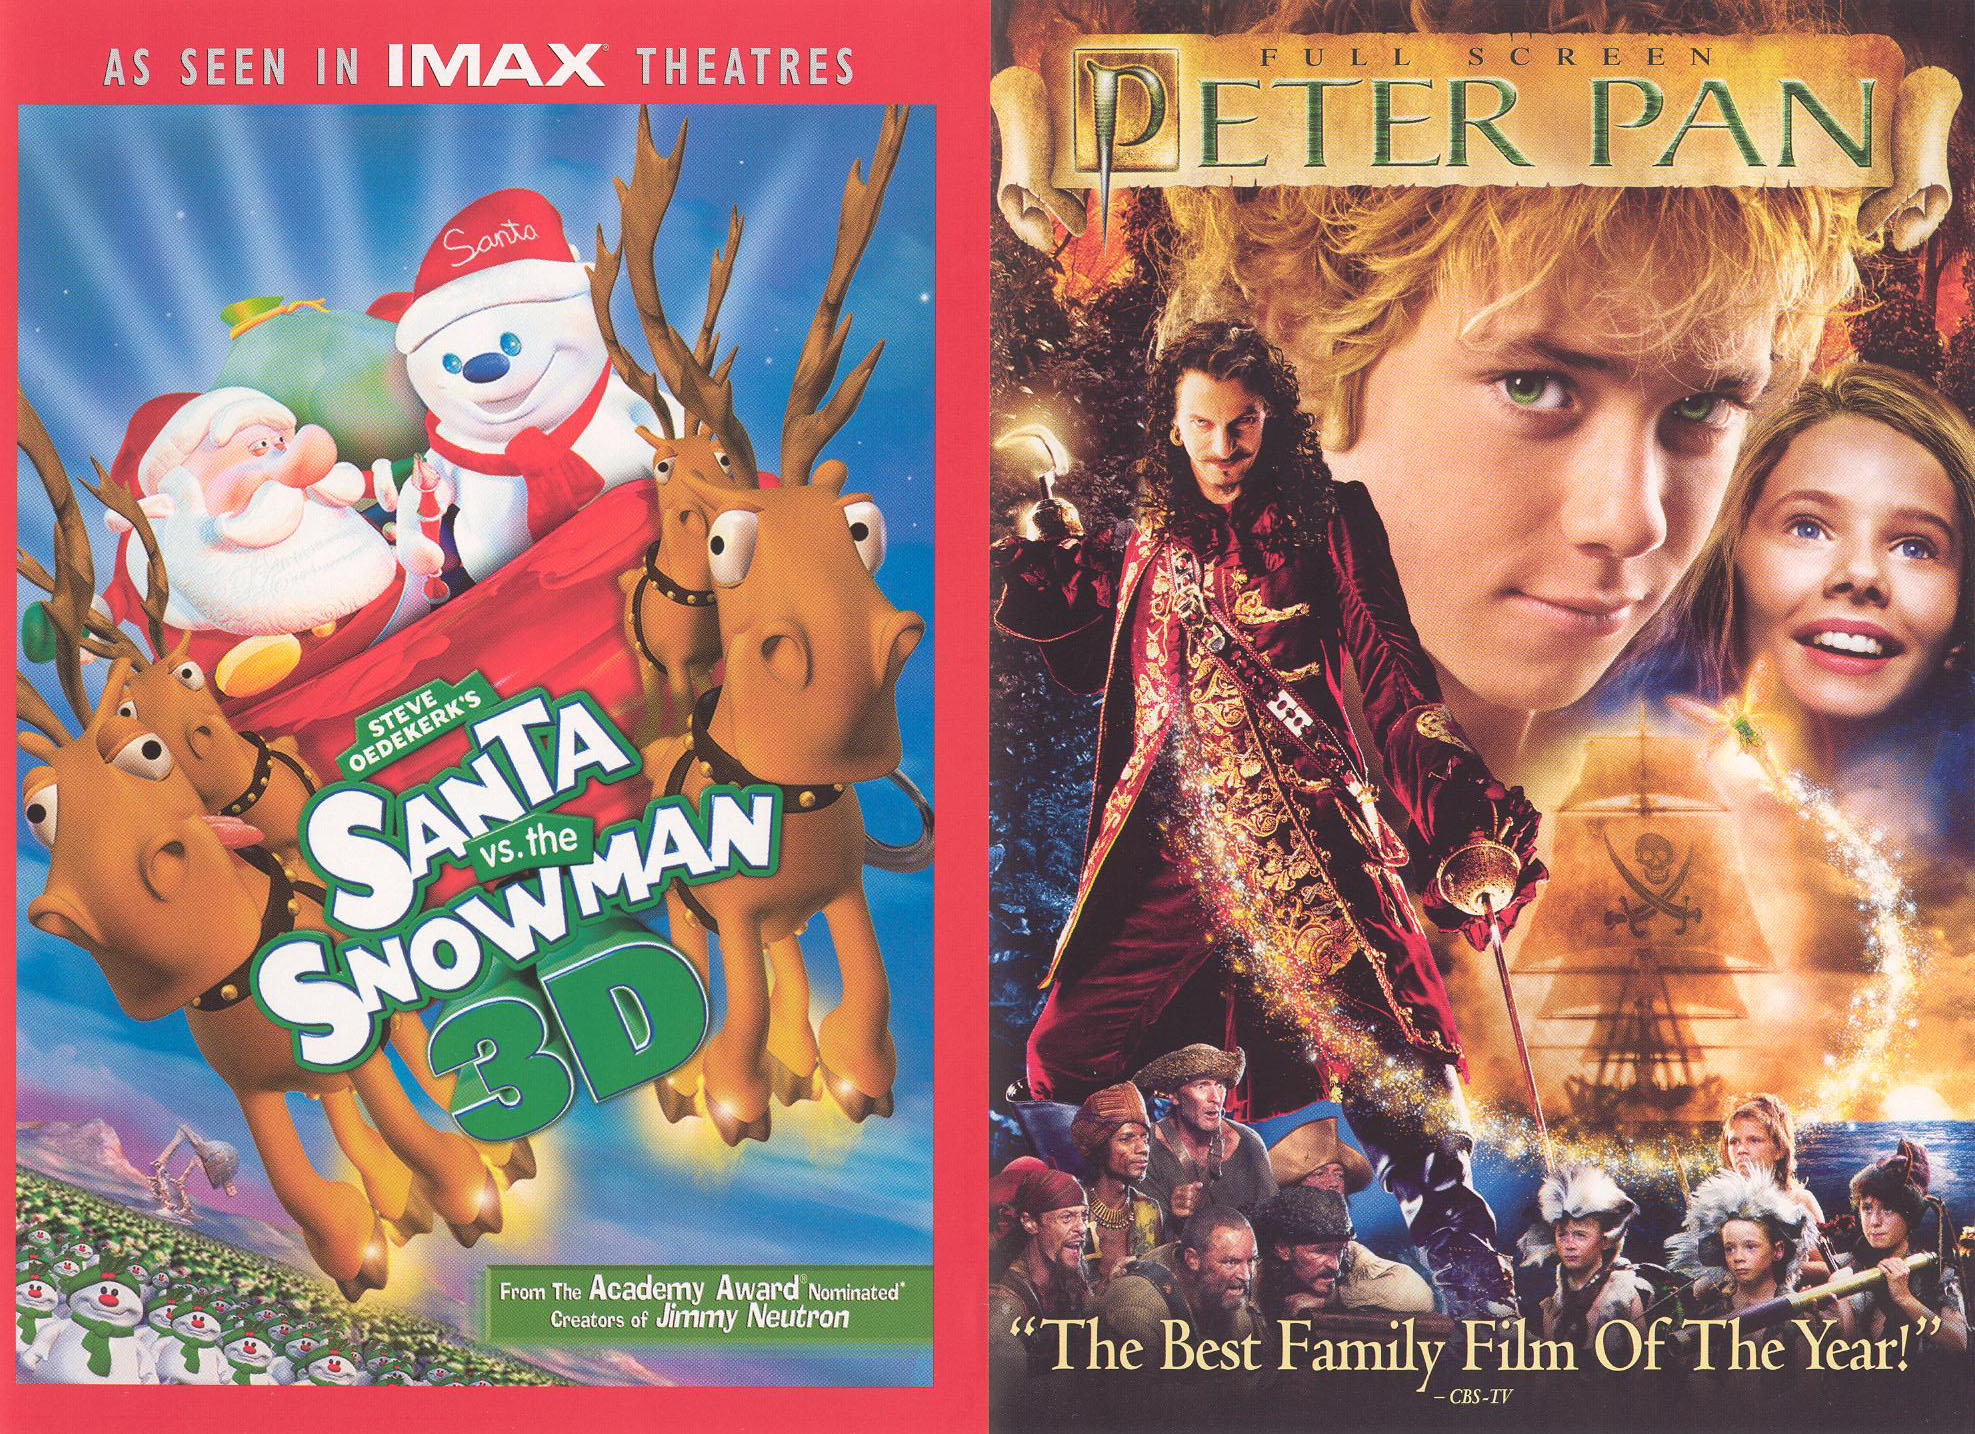 Best Buy: Santa vs. the Snowman 3D/Peter Pan [2 Discs] [DVD]